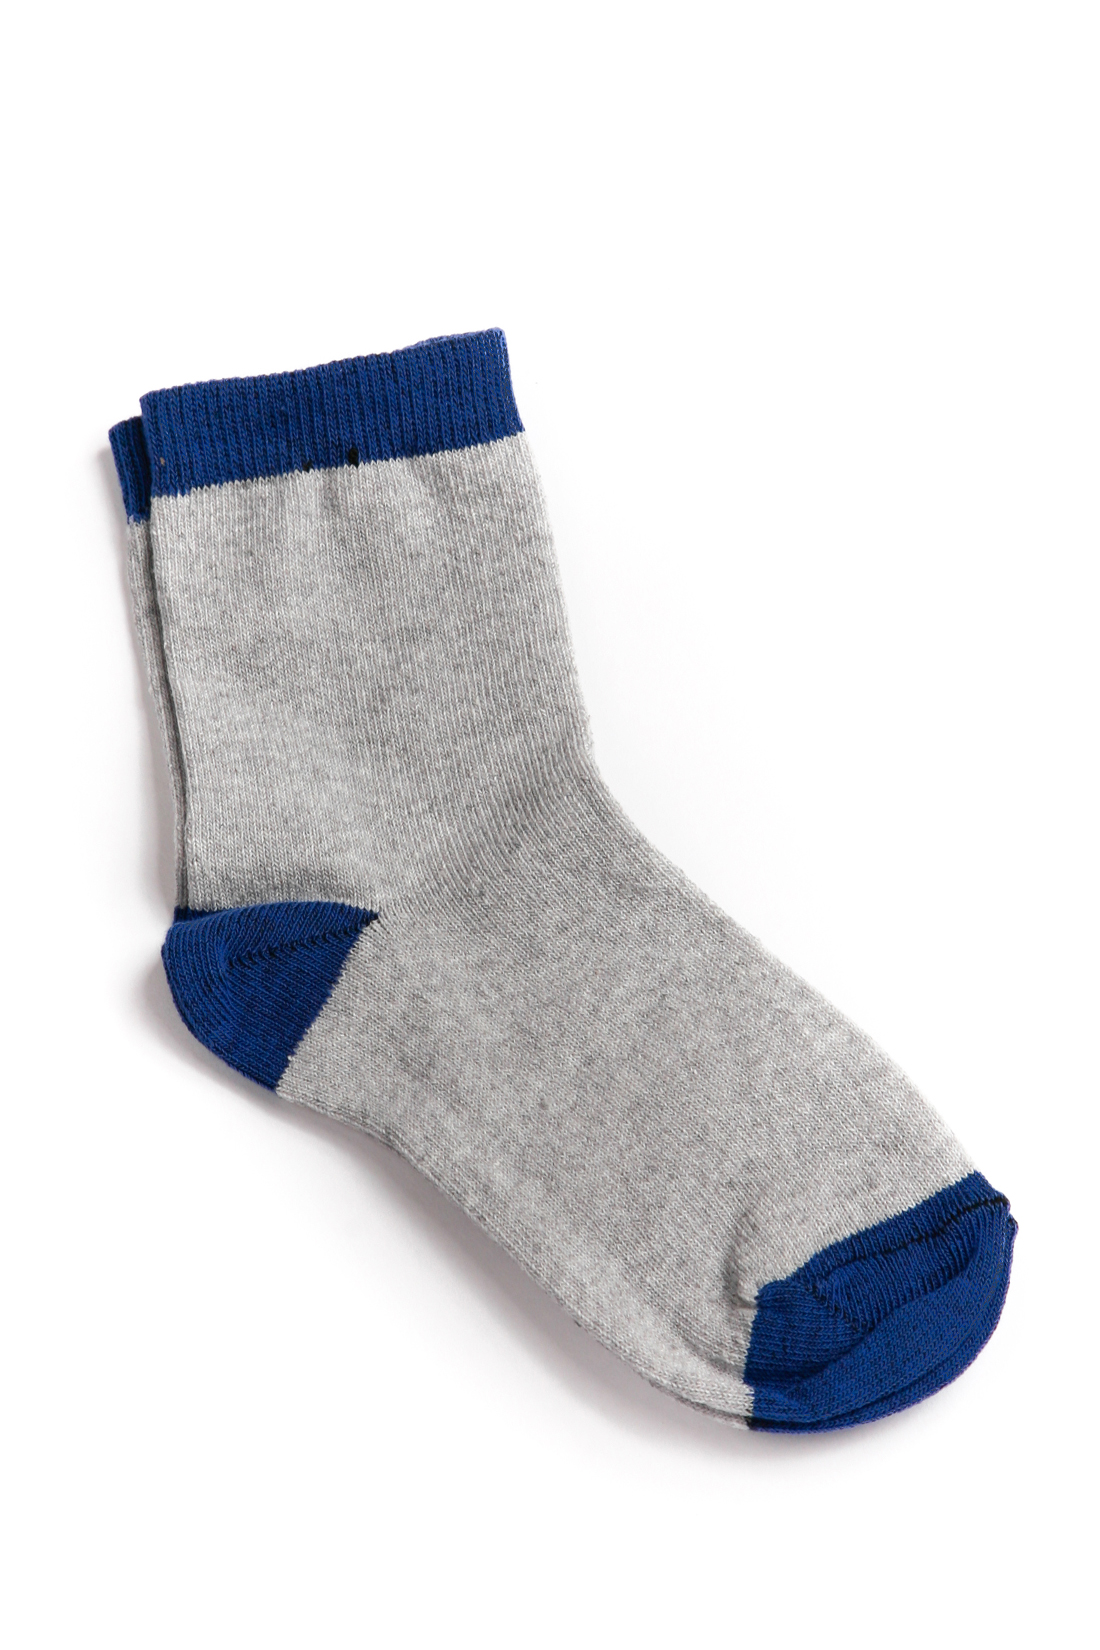 Носки для мальчика (арт. baon BK899002), размер 29/31, цвет zircon melange#серый